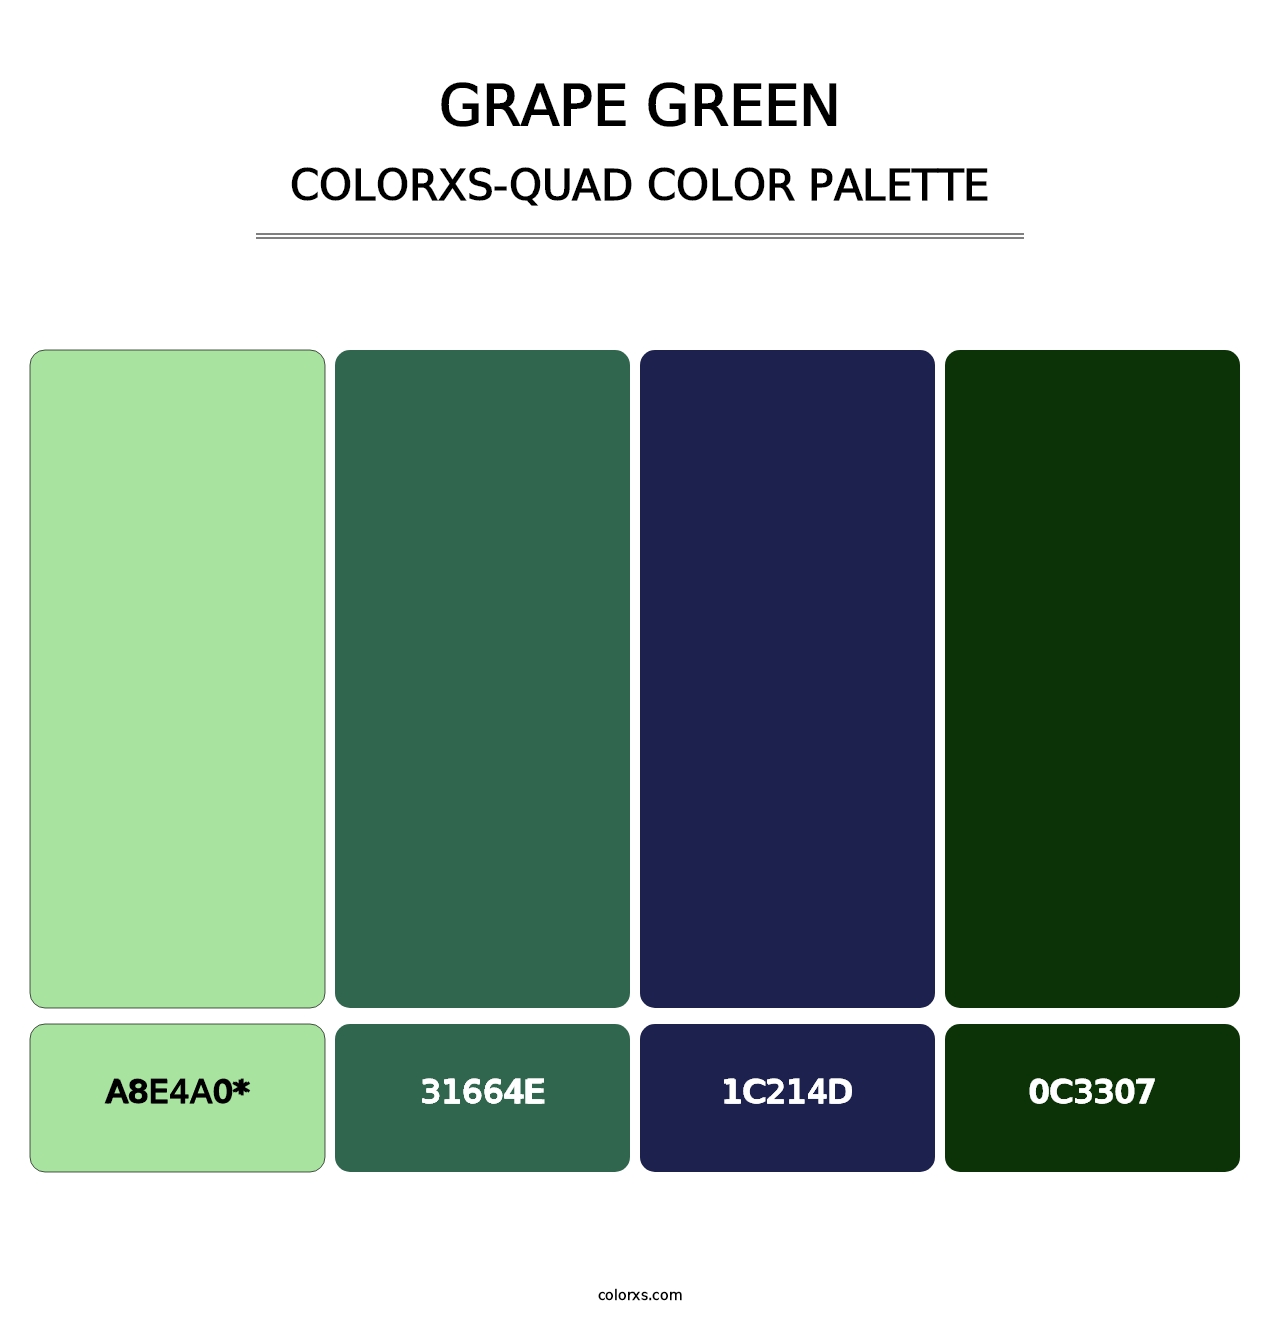 Grape Green - Colorxs Quad Palette